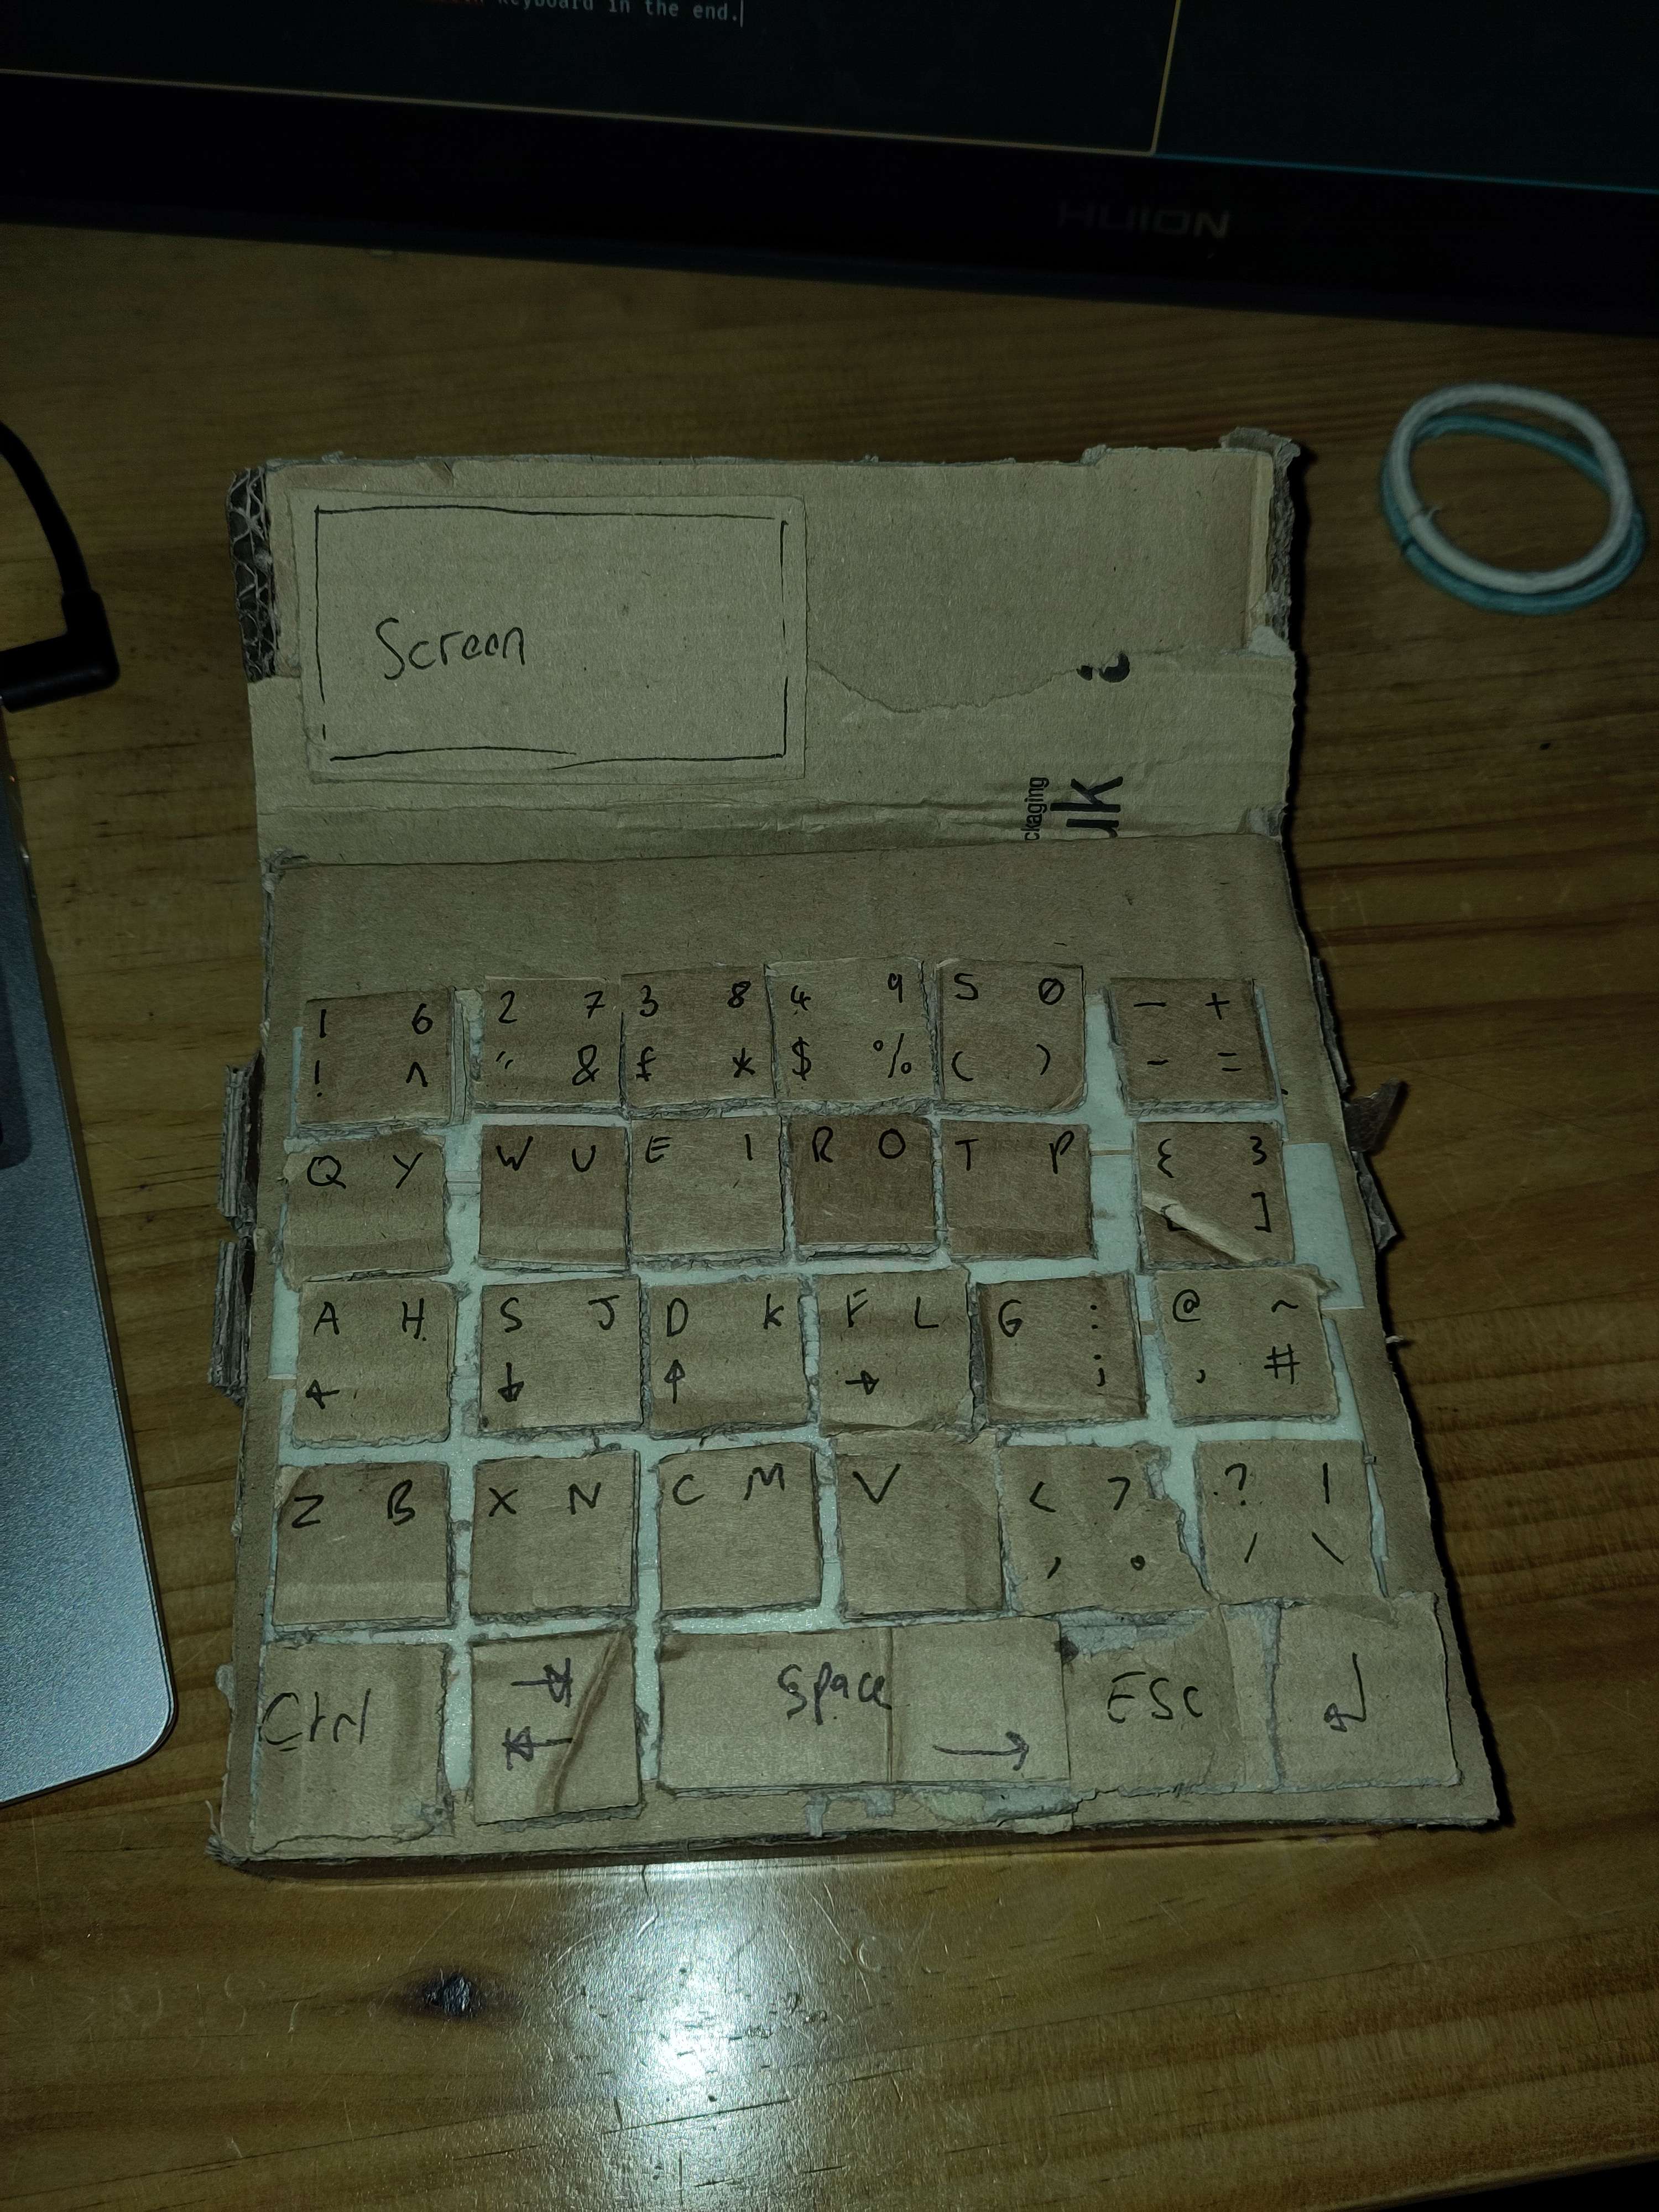 cardboard keyboard prototype